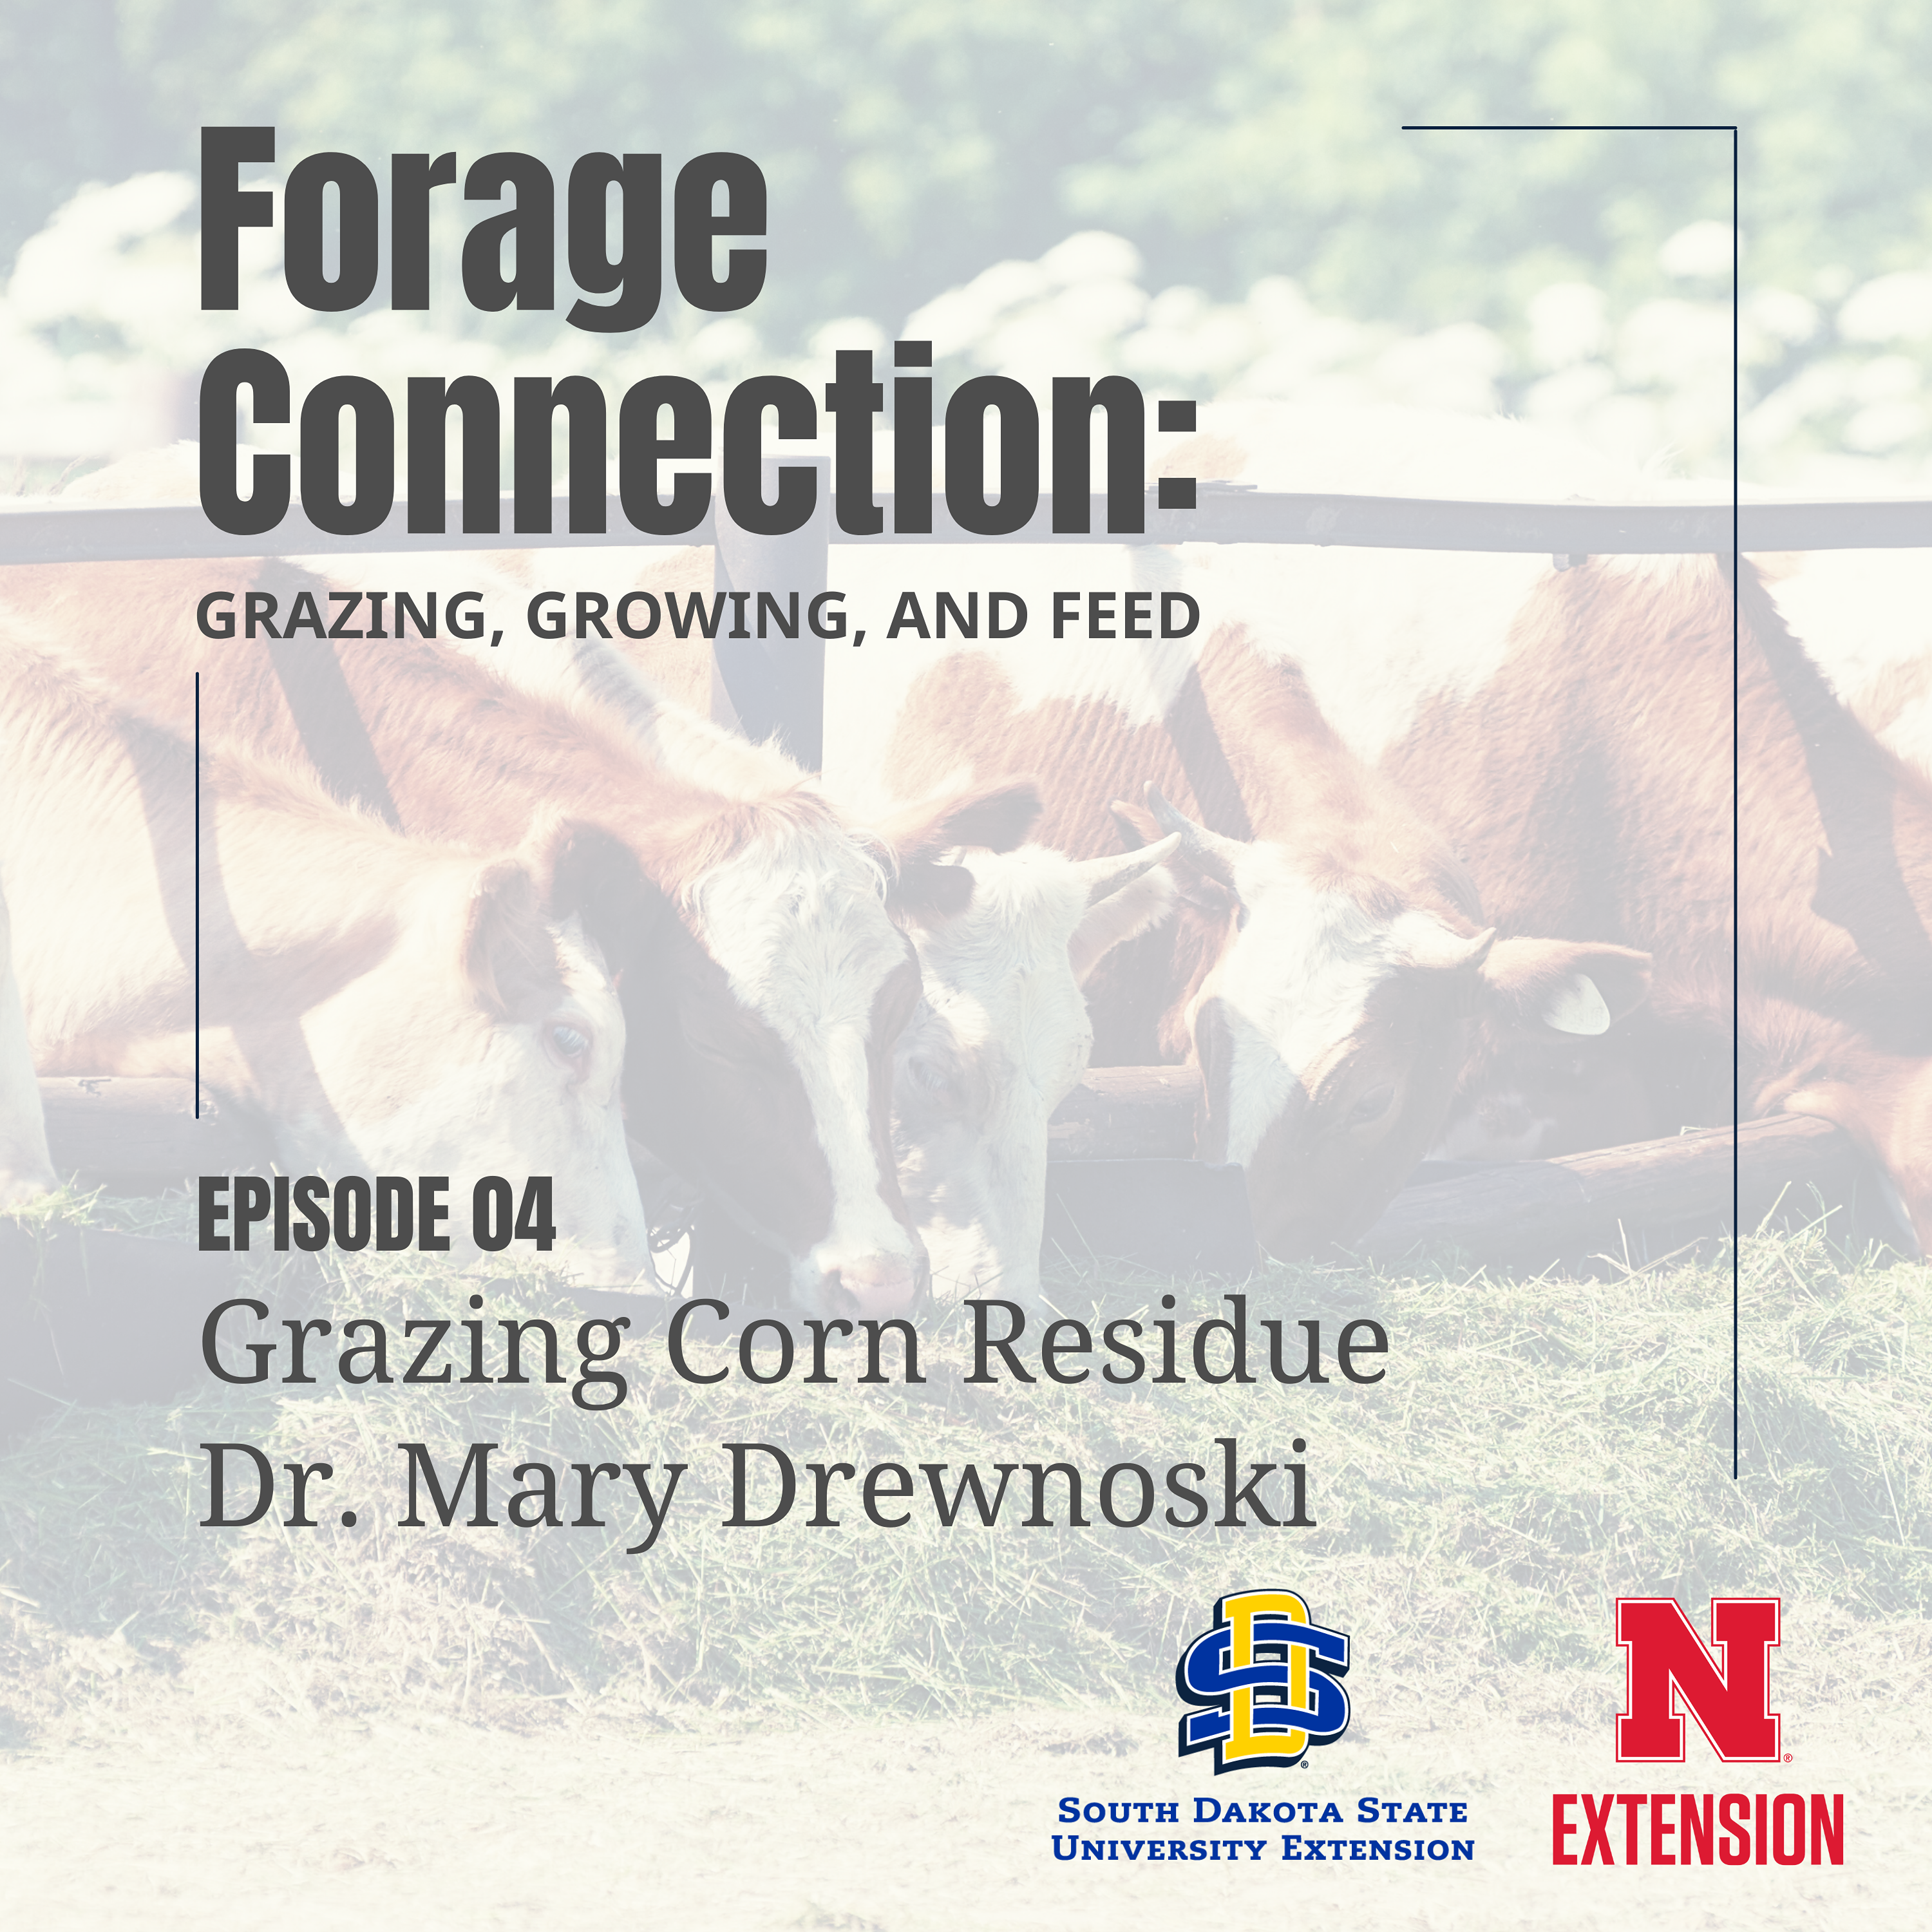 Grazing Corn Residue: Dr. Mary Drewnoski